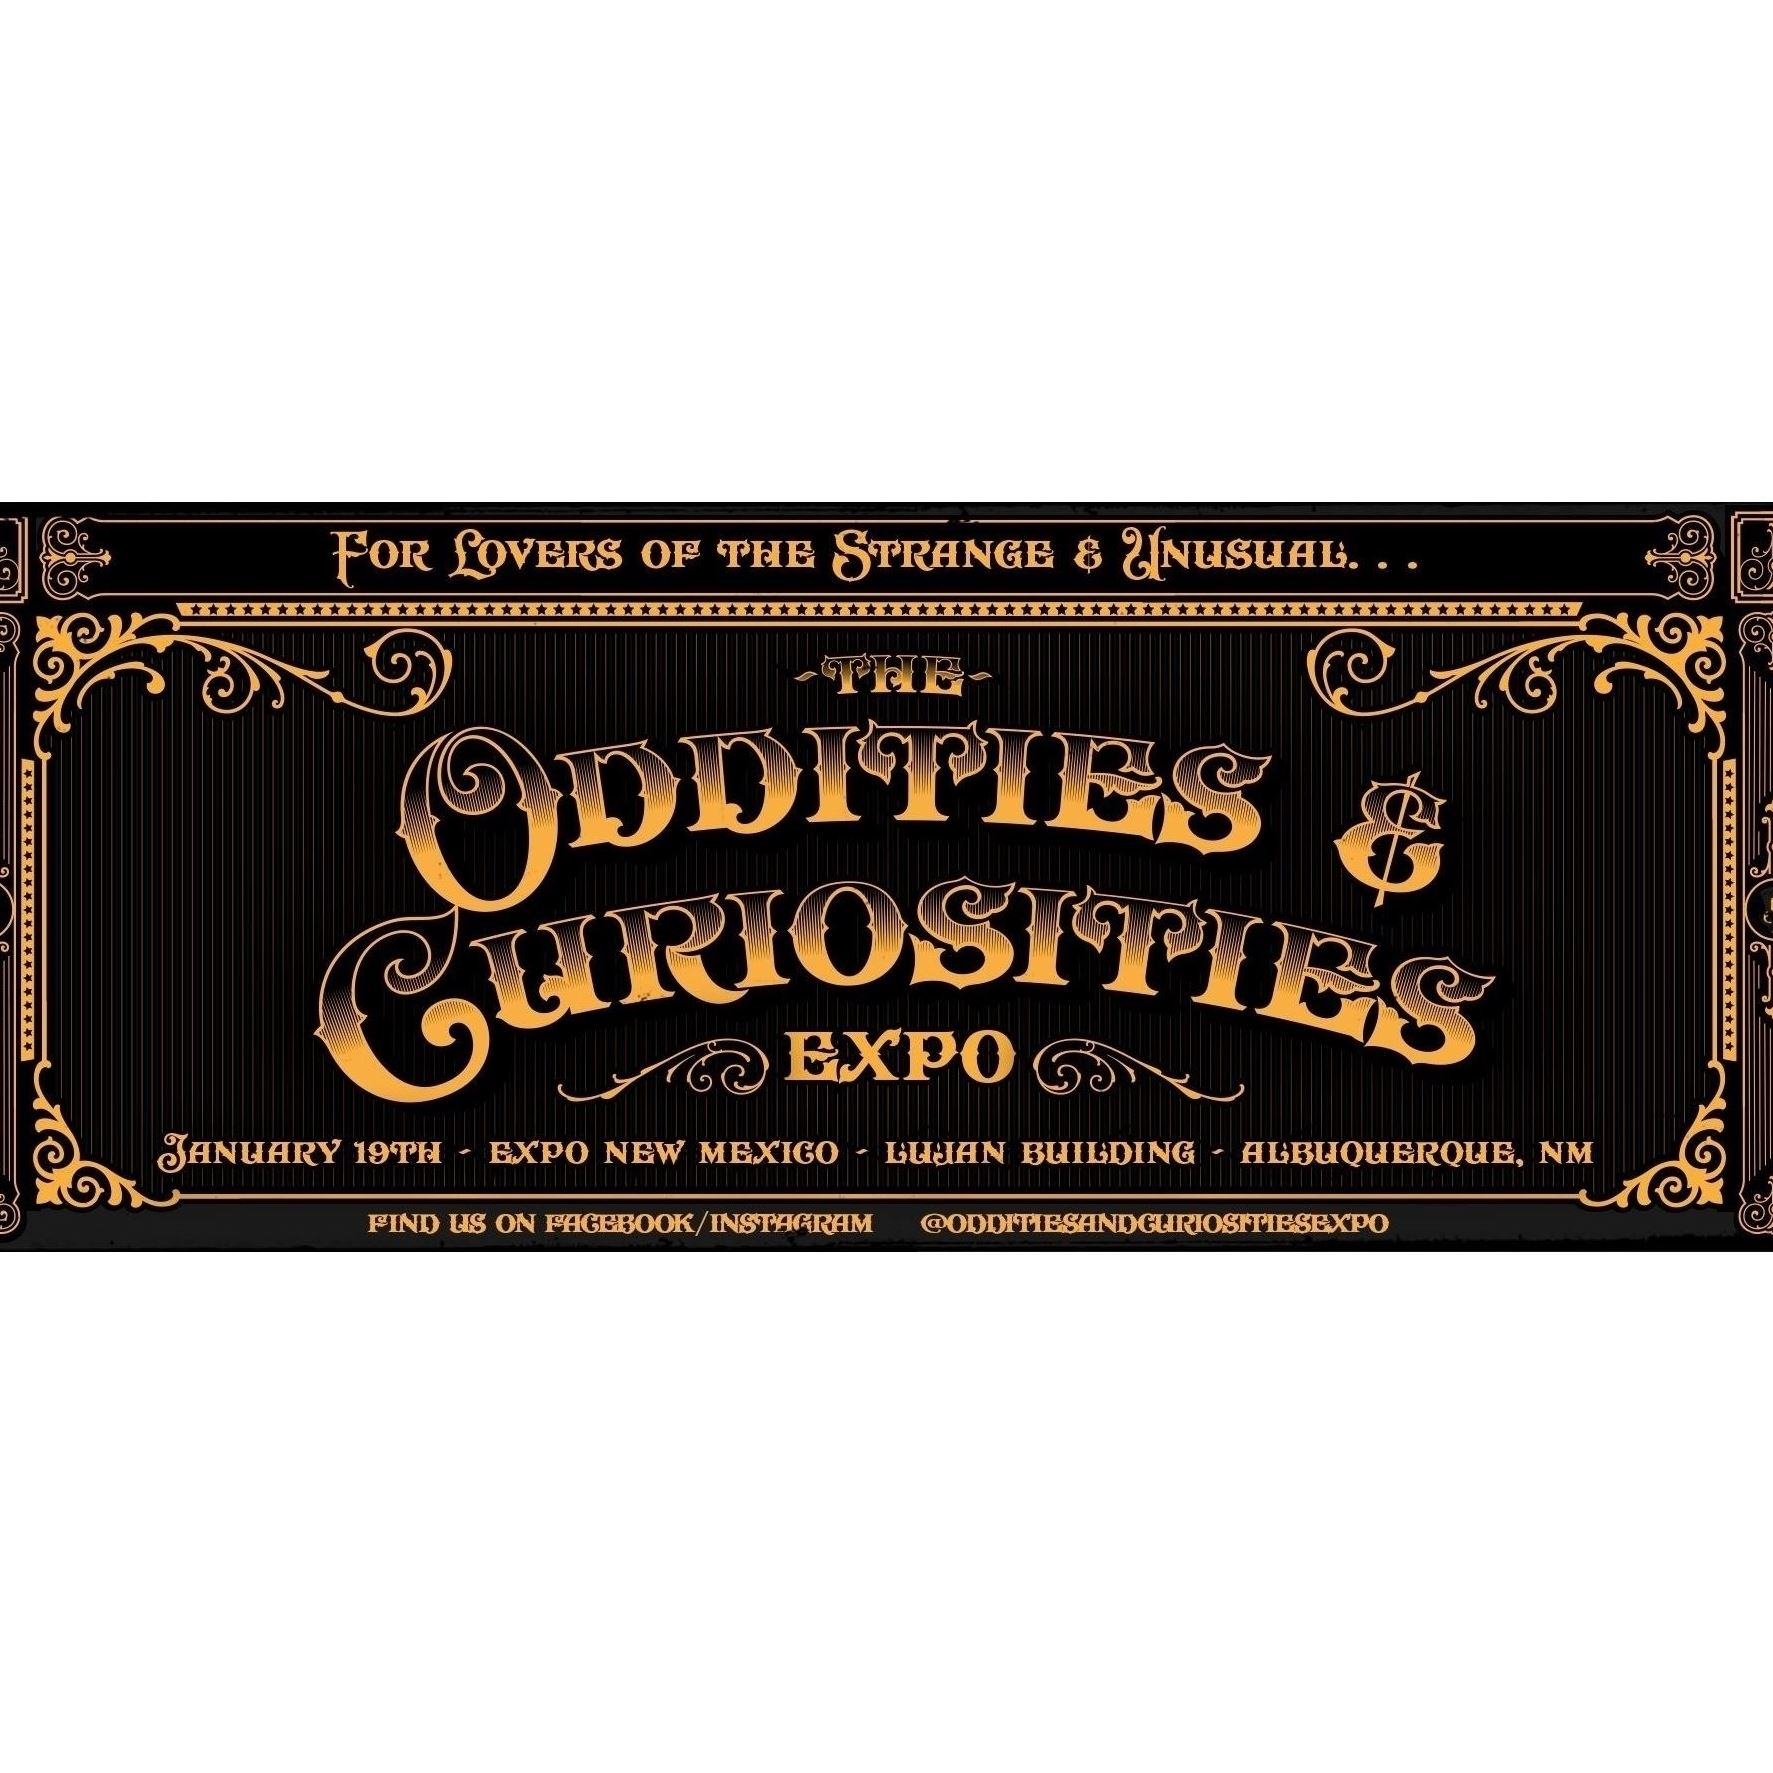 oddities and curiosities expo 2021 tickets